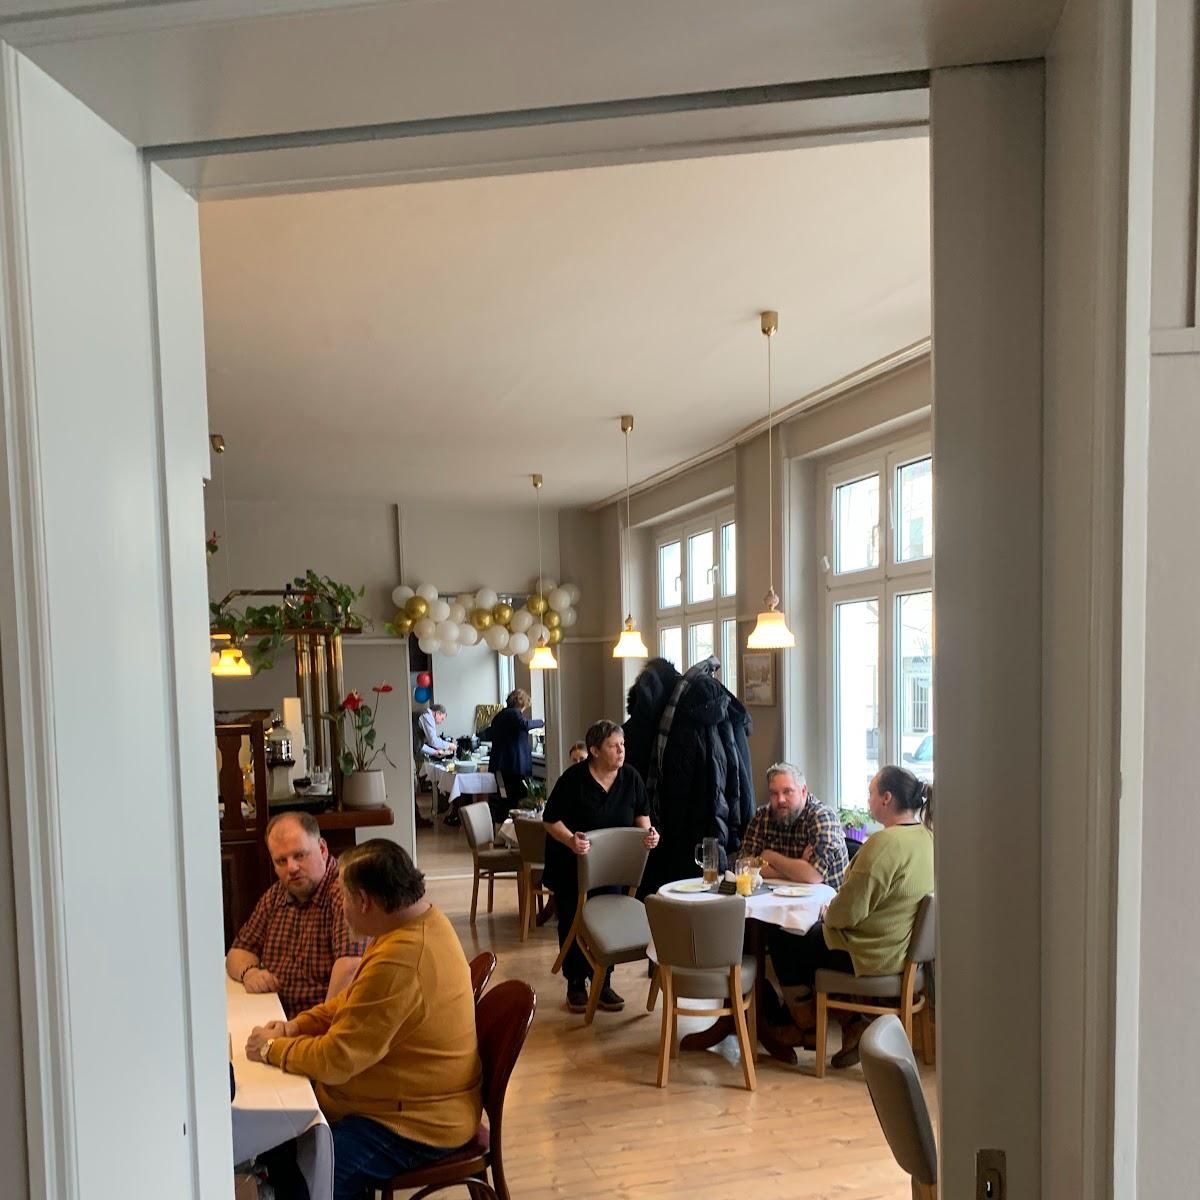 Restaurant "Cafe am See" in Strausberg